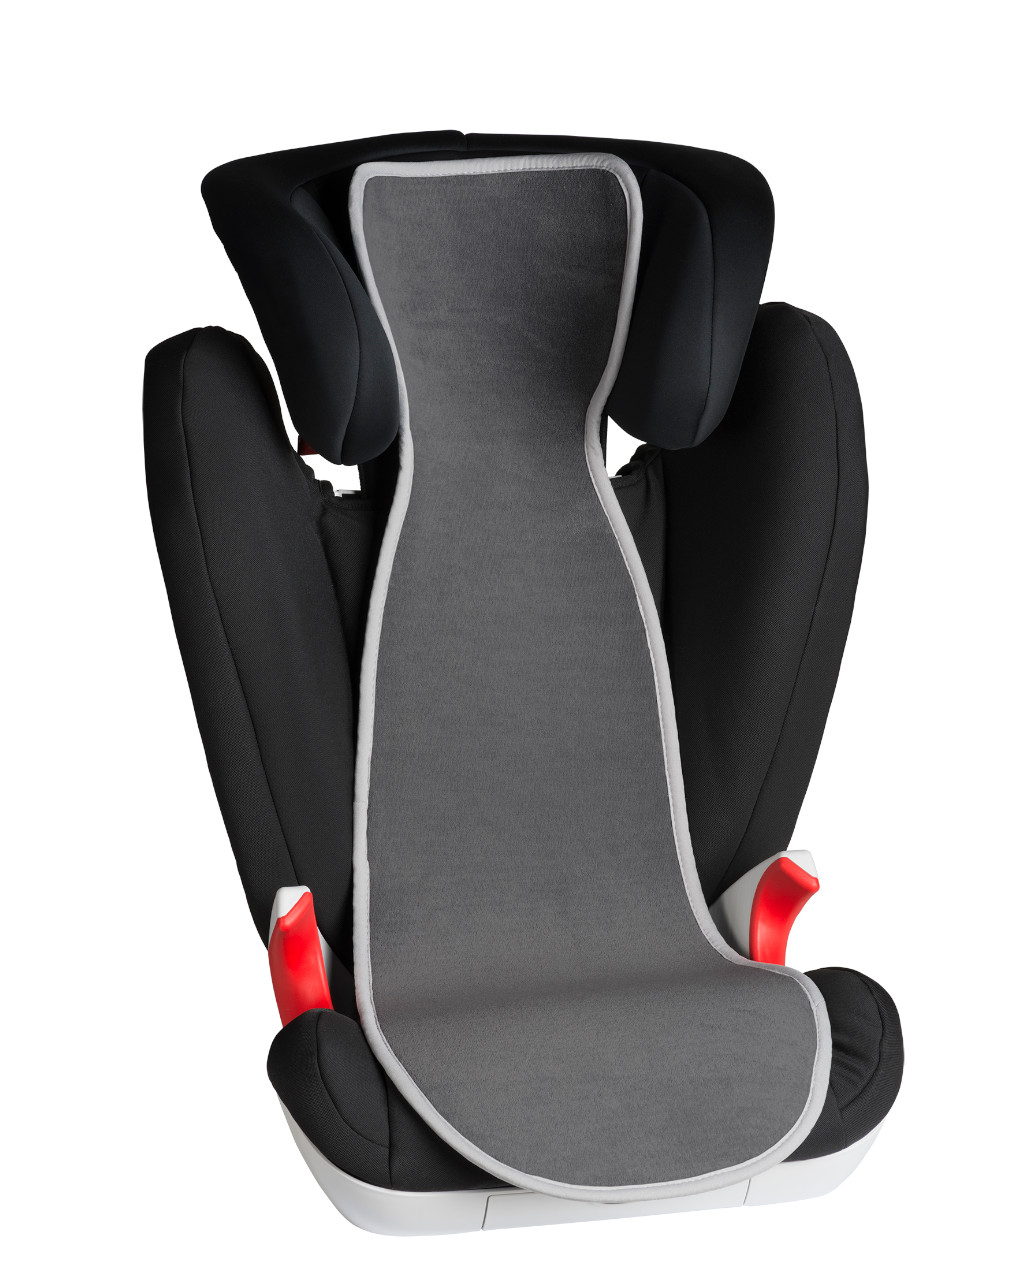 Cool seat foderina grigia gruppo 2/3 - aircuddle - AirCuddle